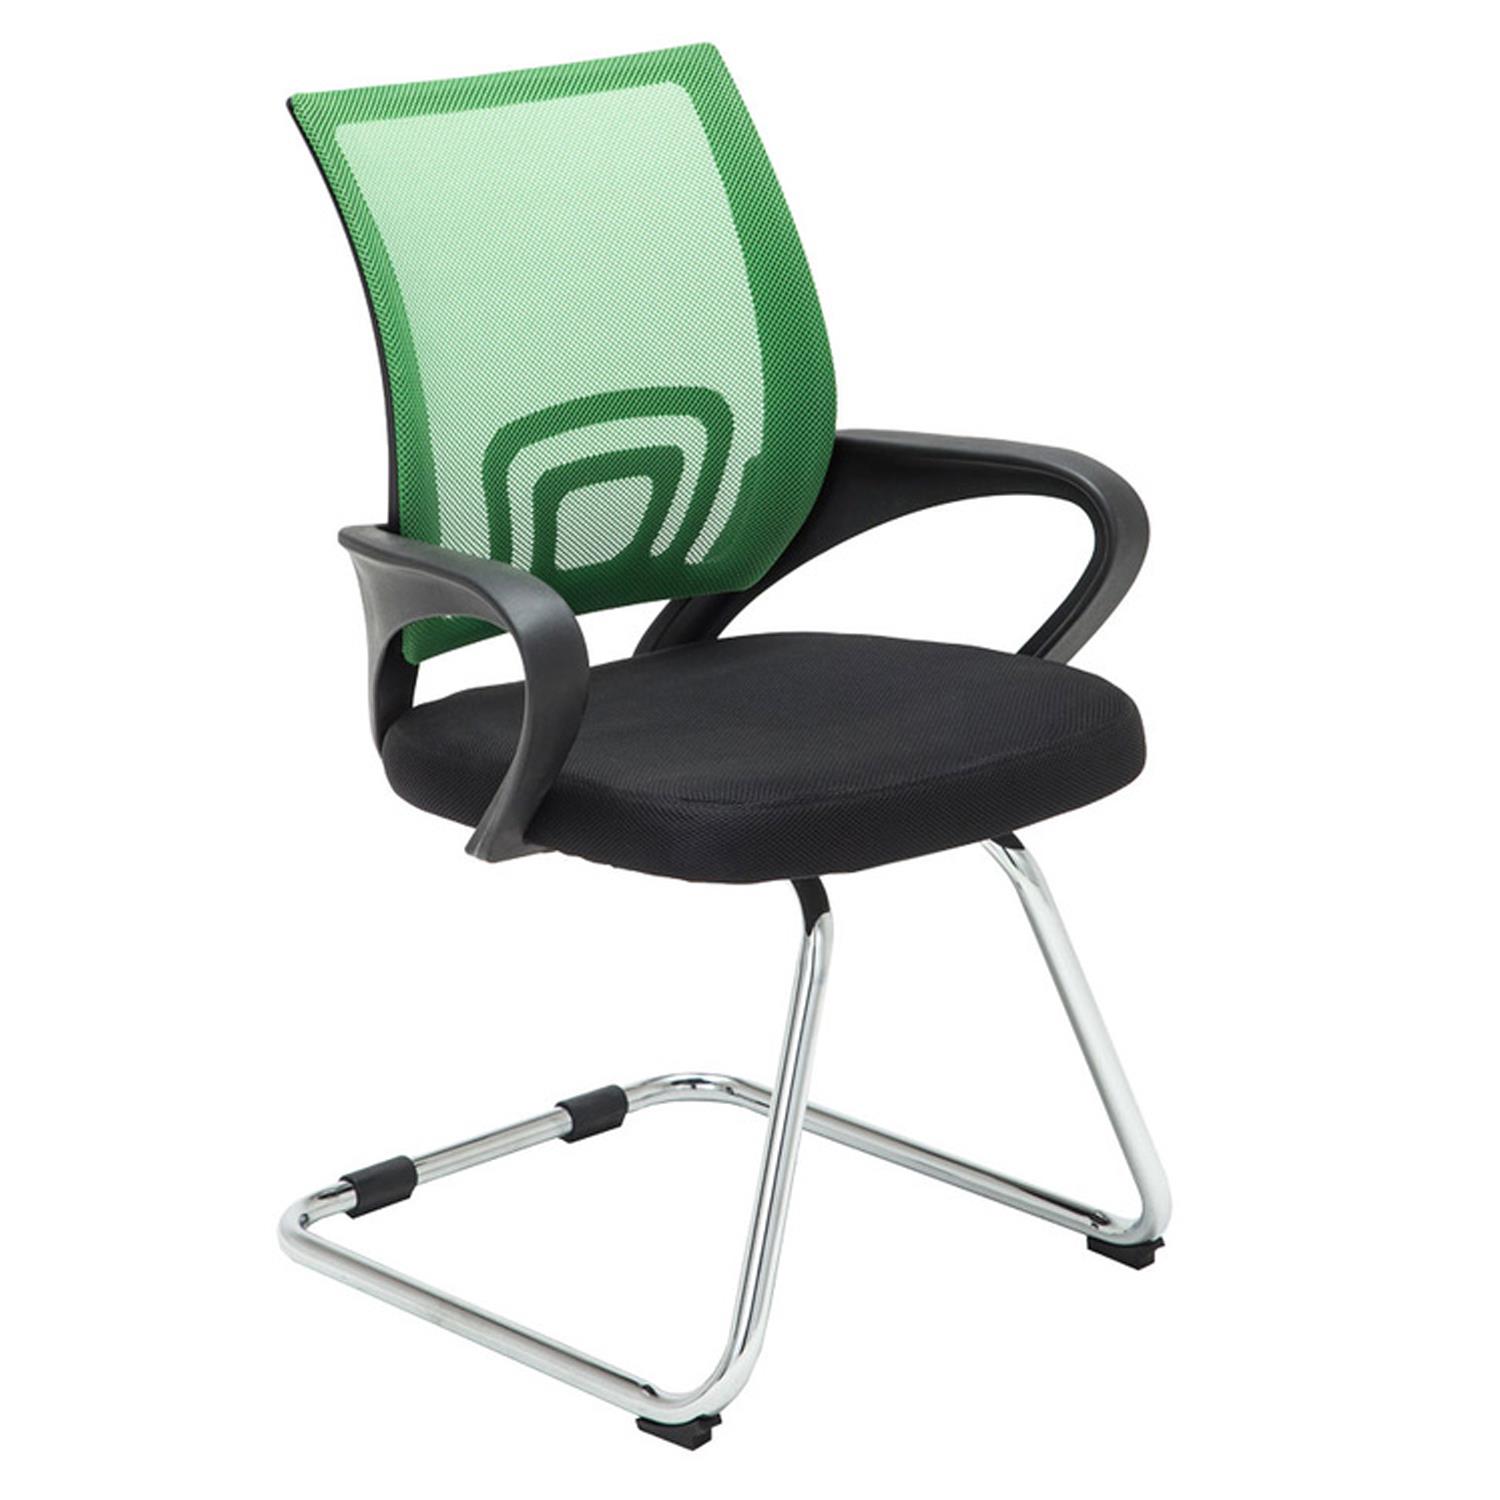 Cadeira de Visita SEUL V, Design Atractivo, Assento Acolchoado, Cor Verde